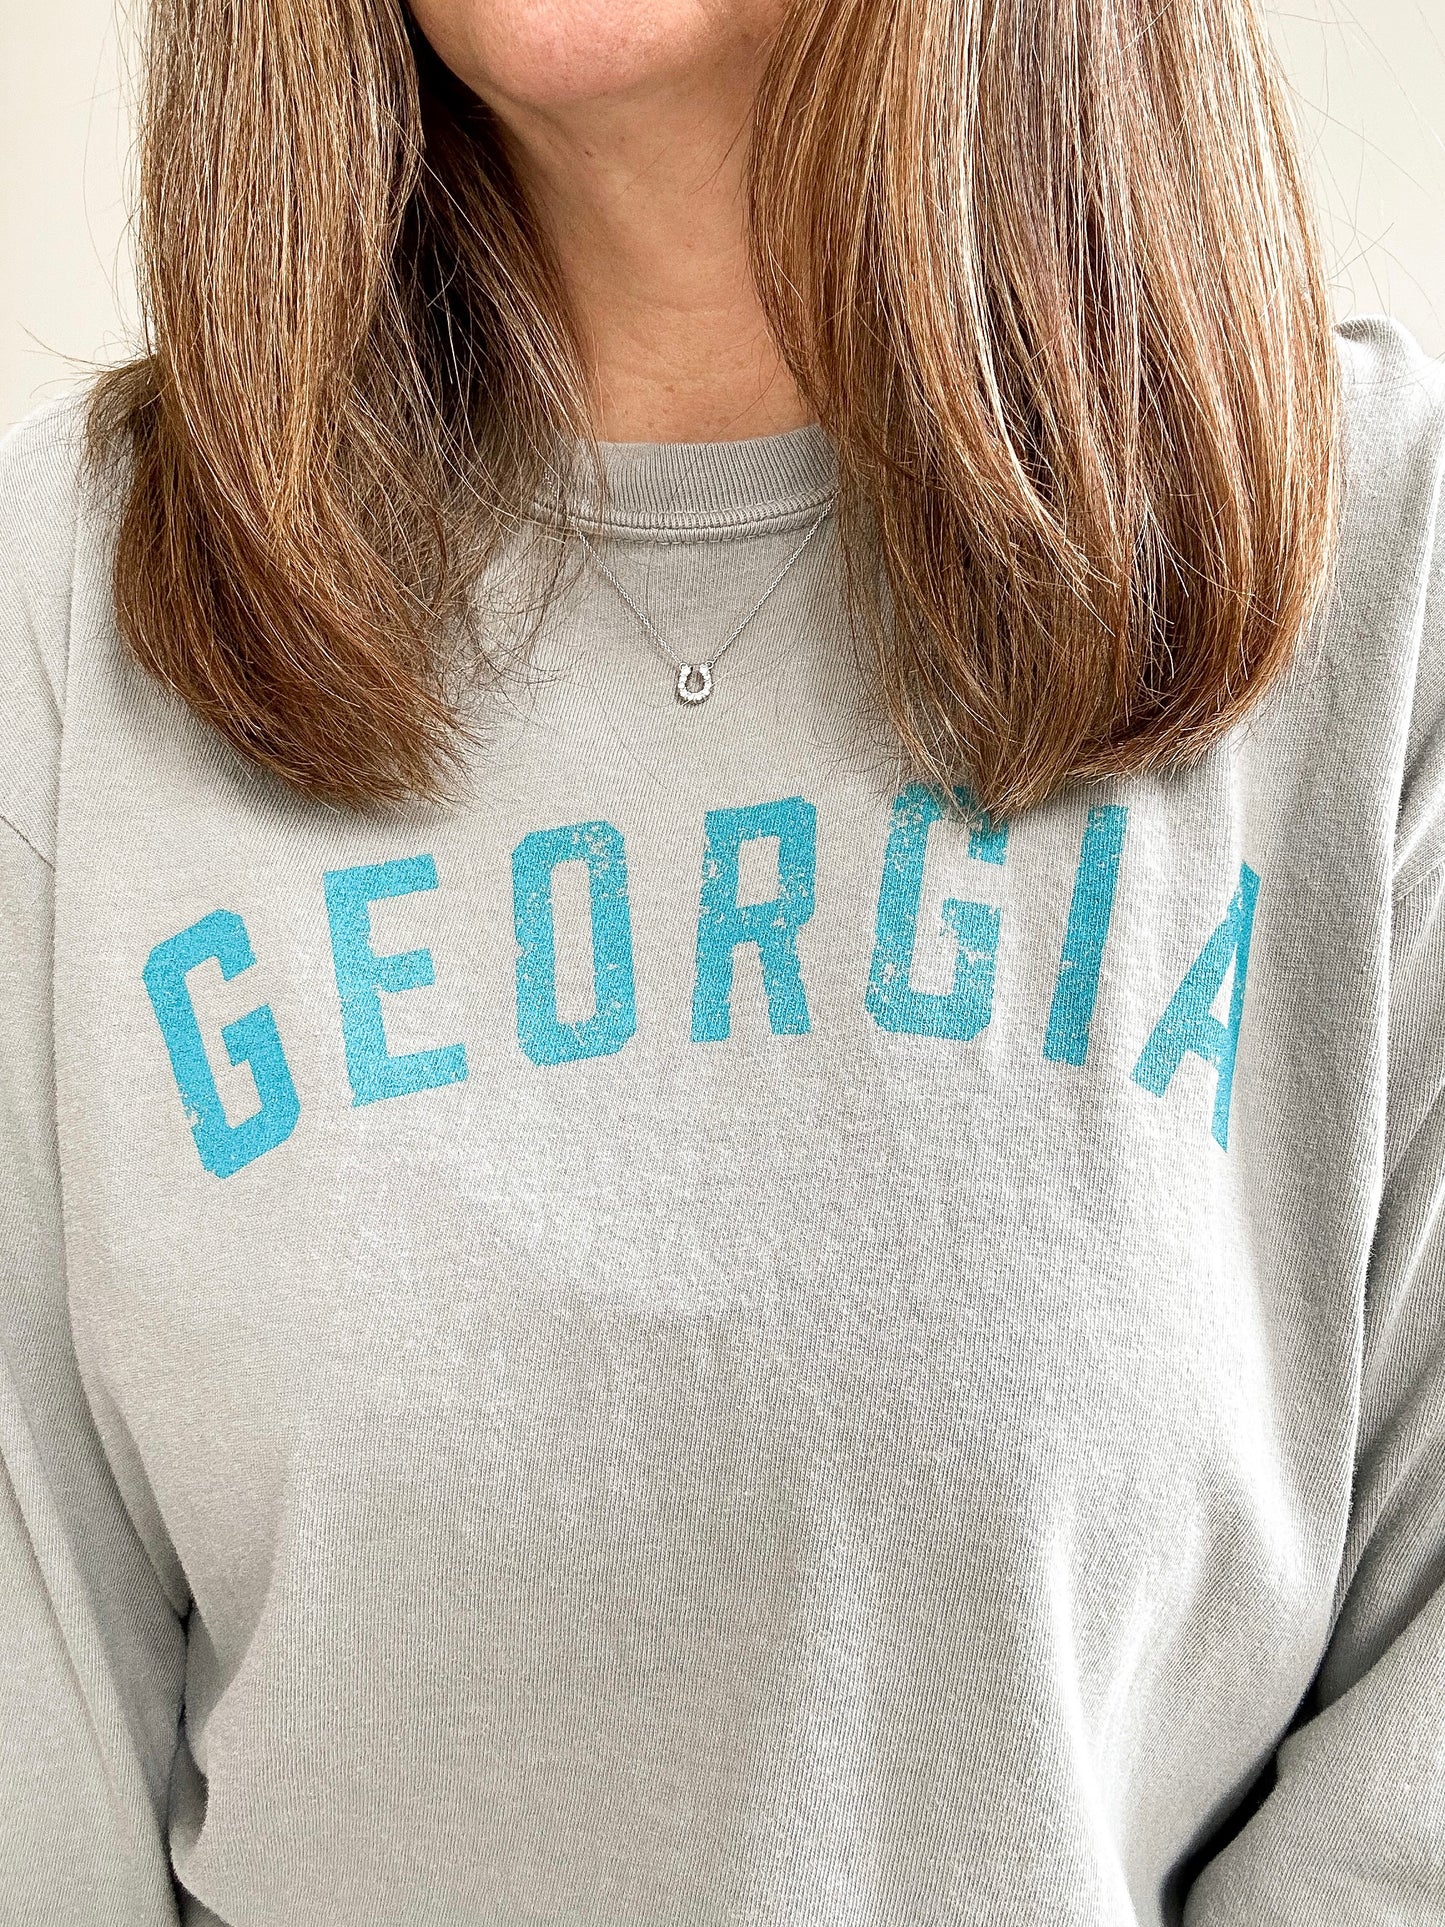 GEORGIA Graphic Garment dyed T-Shirt